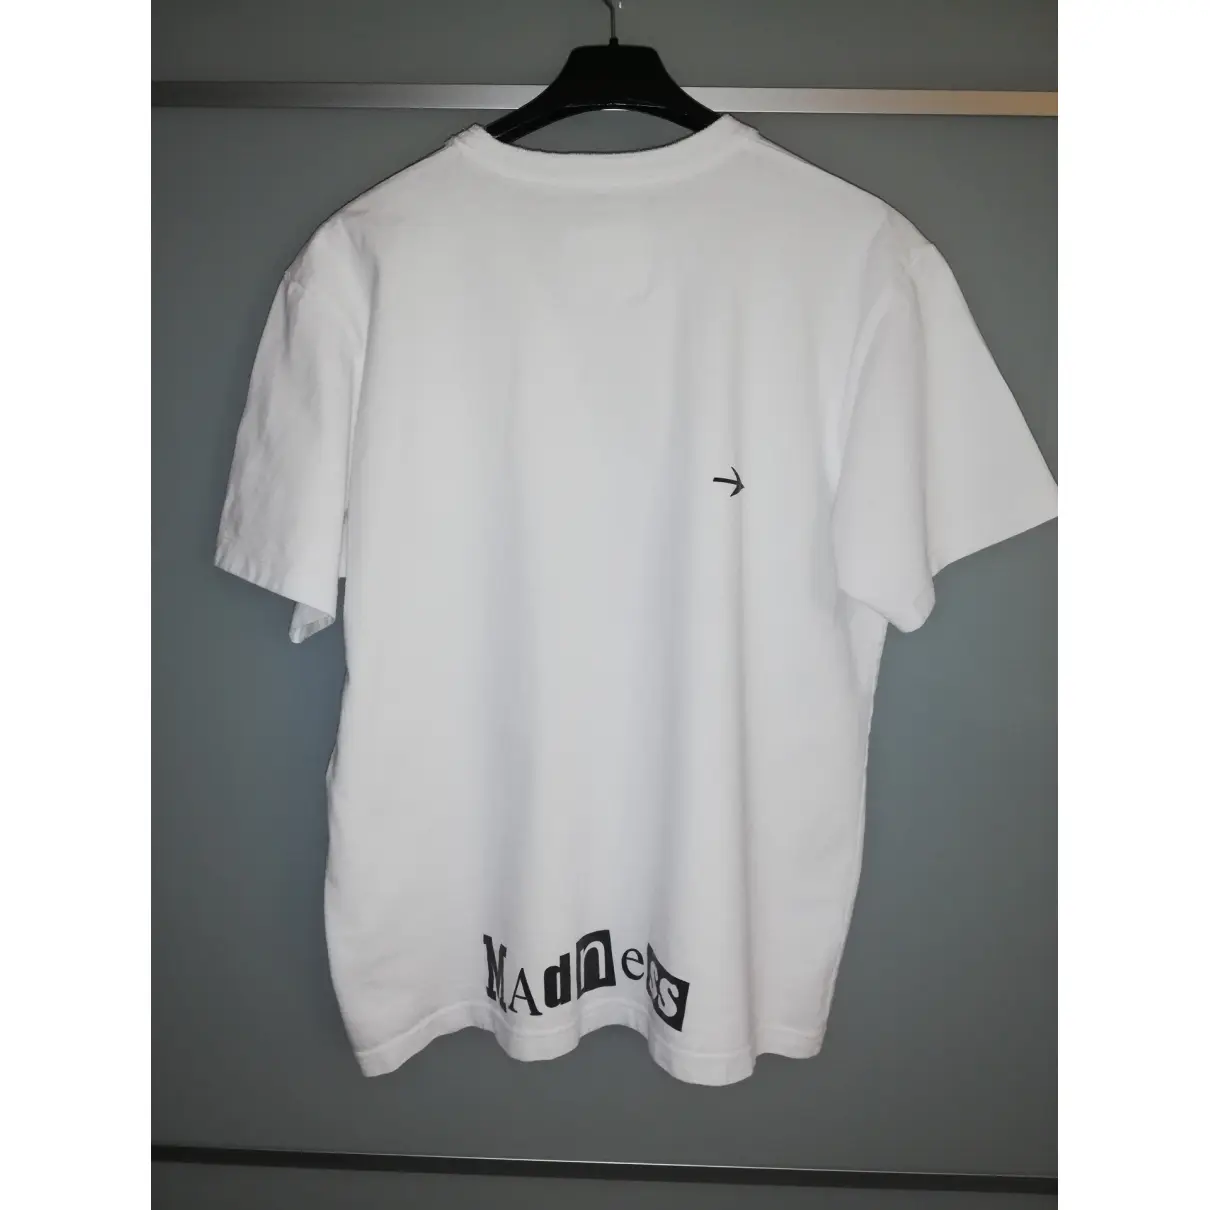 Buy Sacai White Cotton T-shirt online